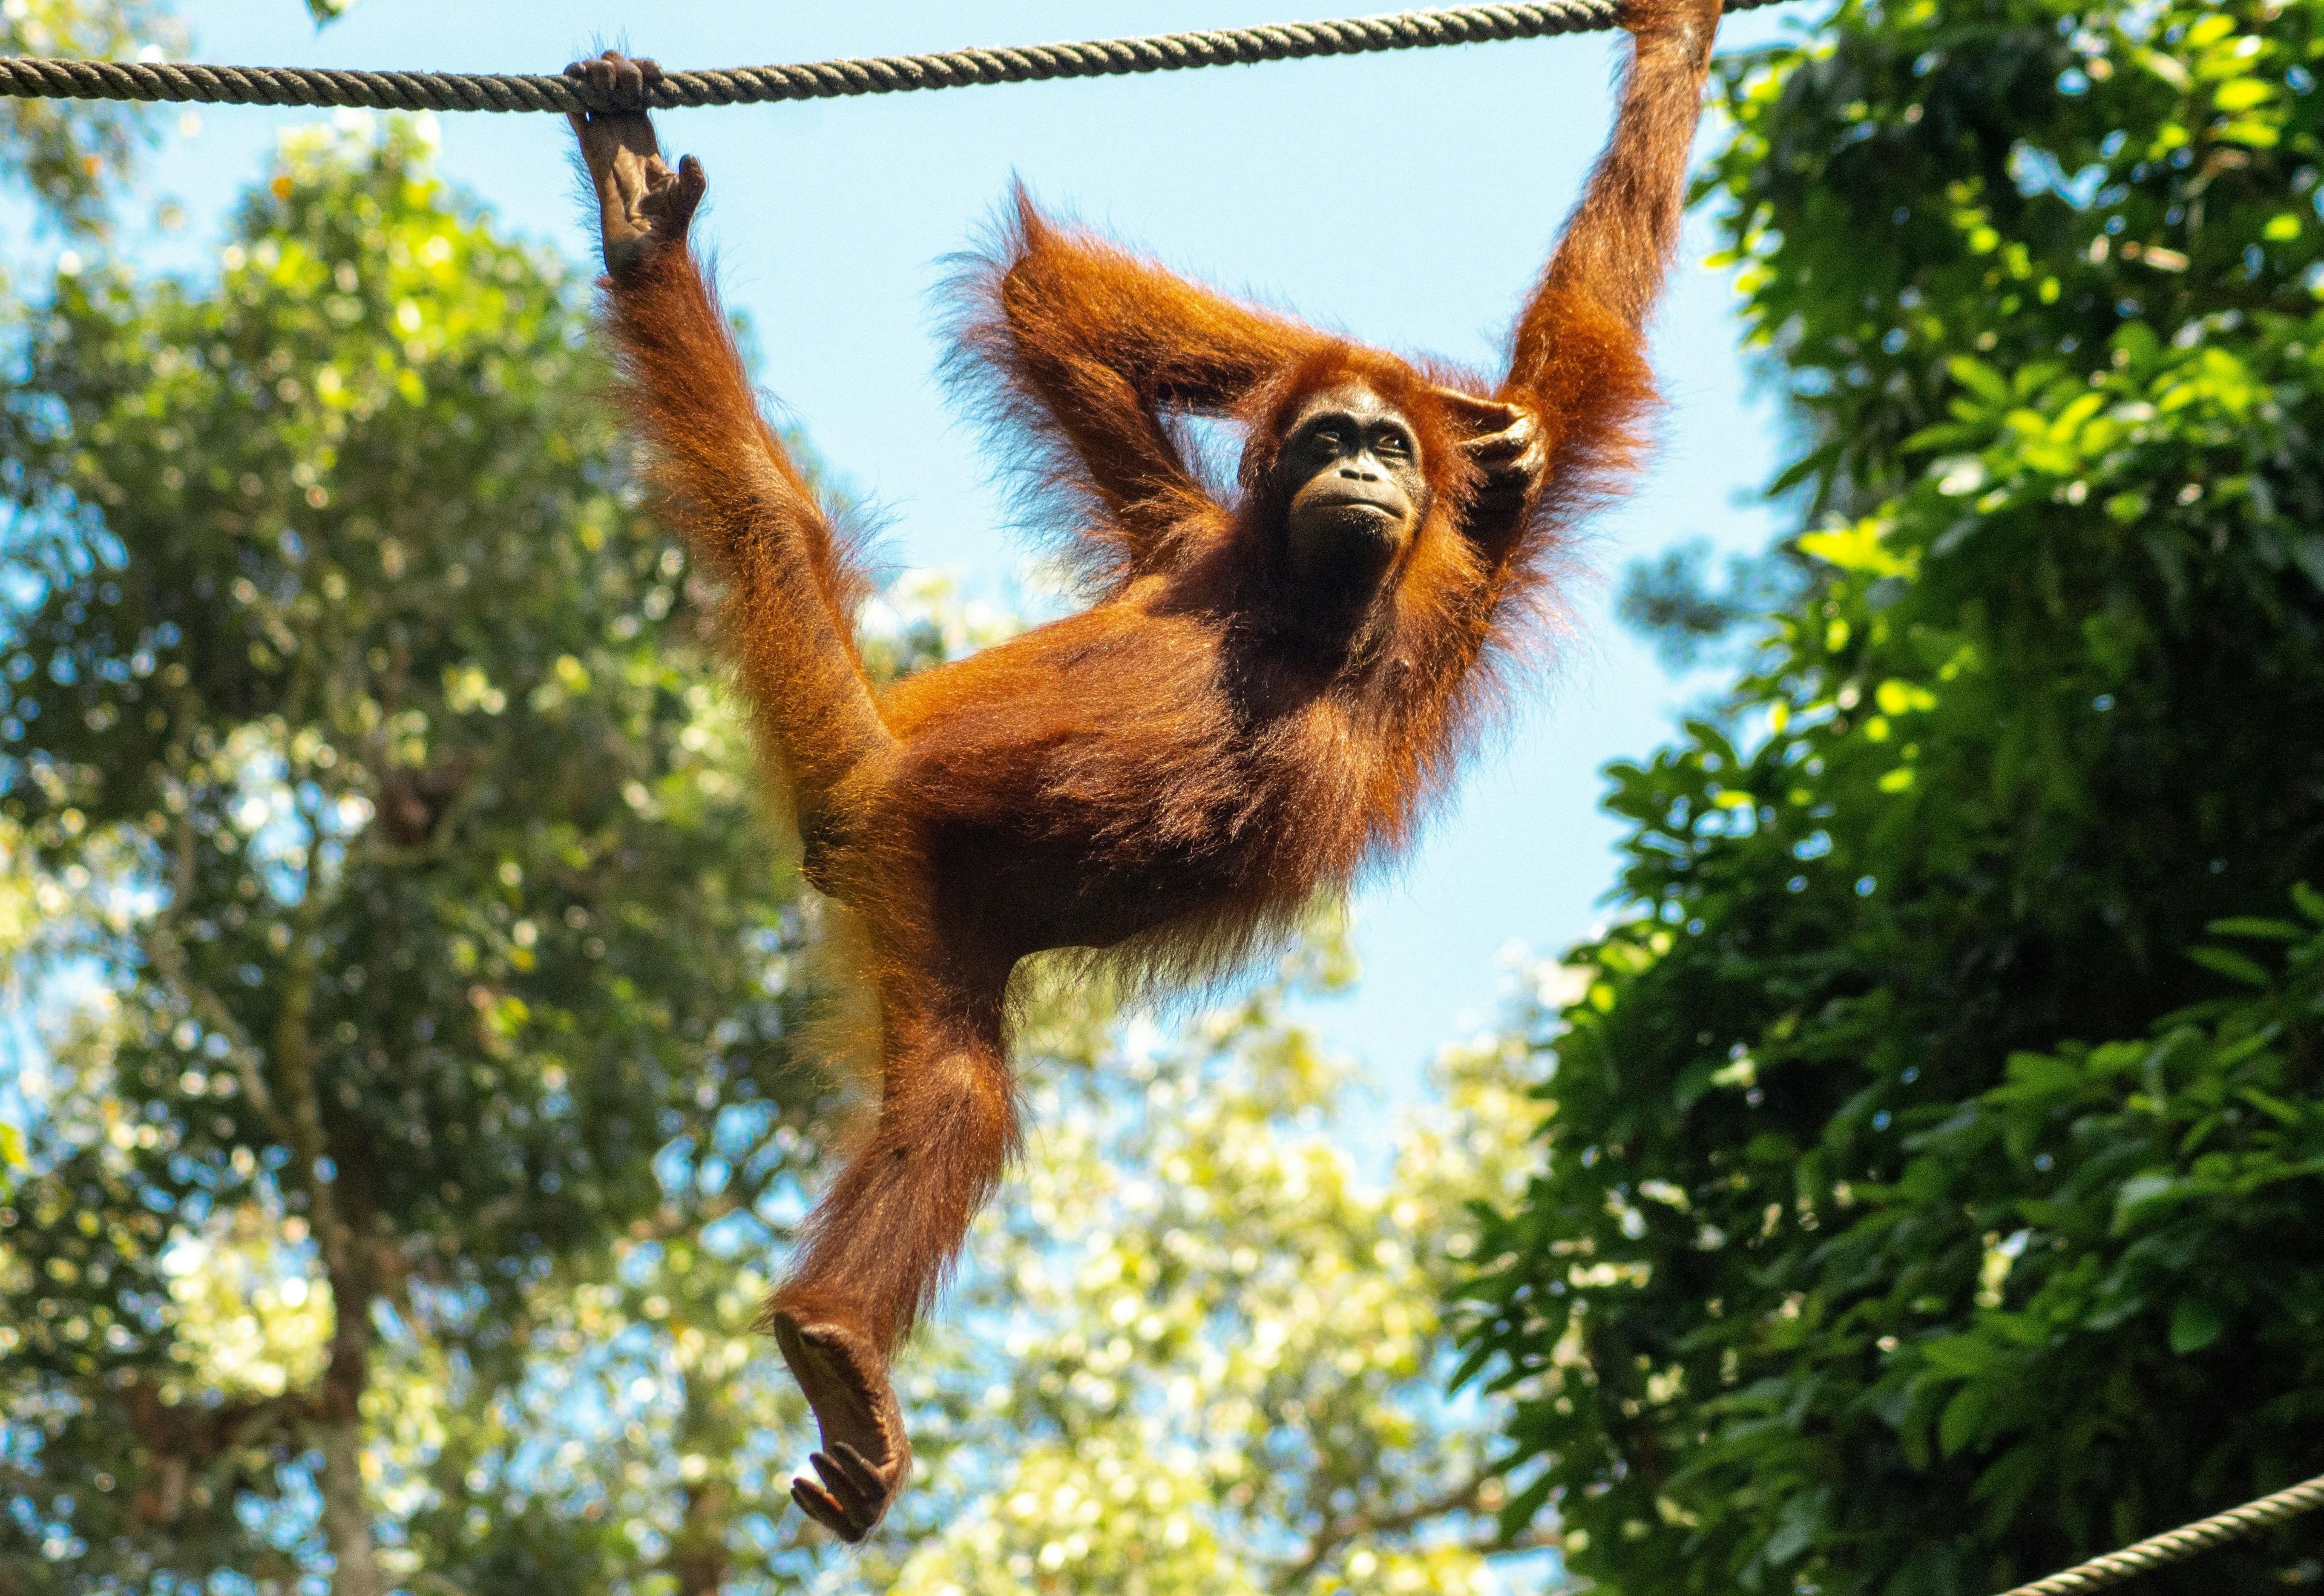 Orangutan in rehabilitation center in Sabah, Malaysia.